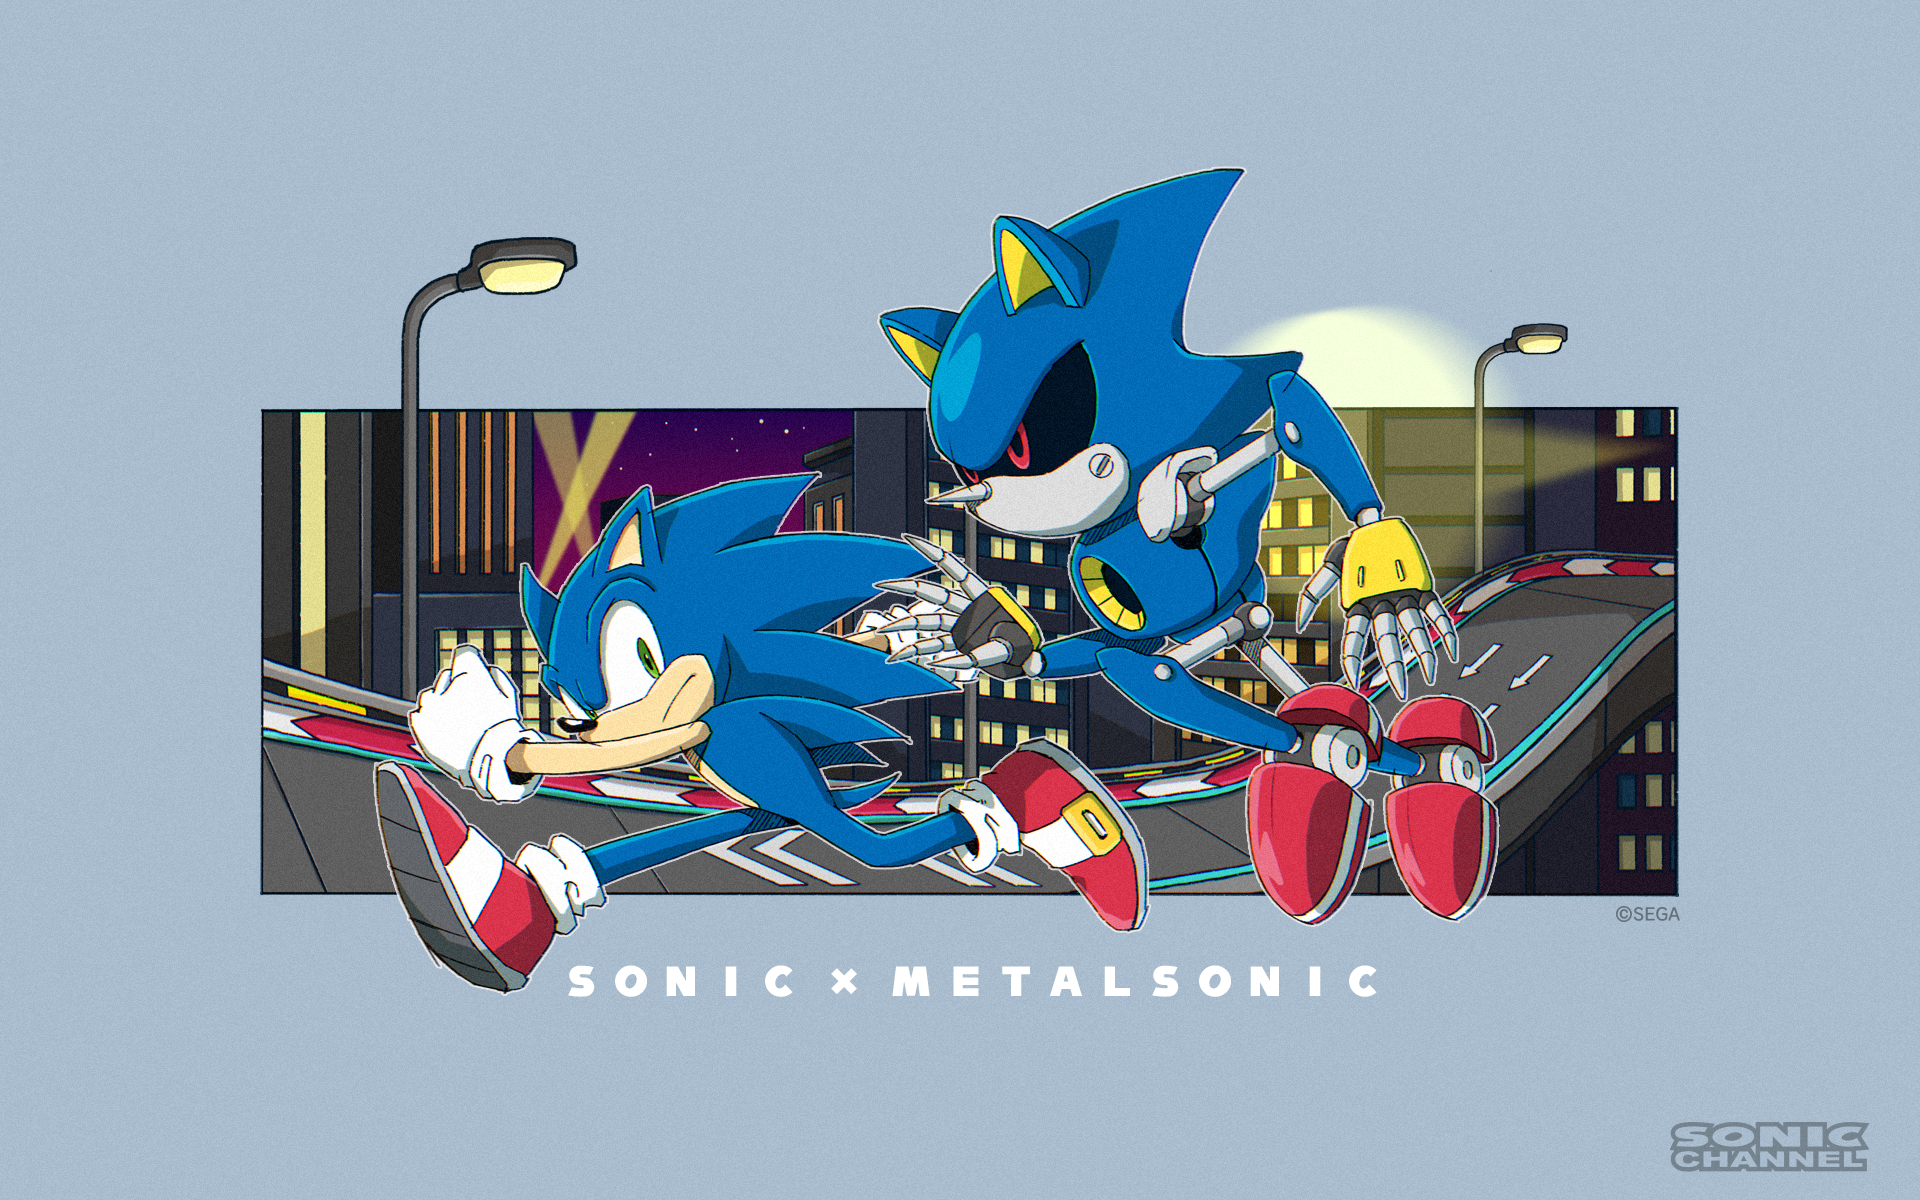 Sonic y amy, Cómo dibujar a sonic, Sonamy comic